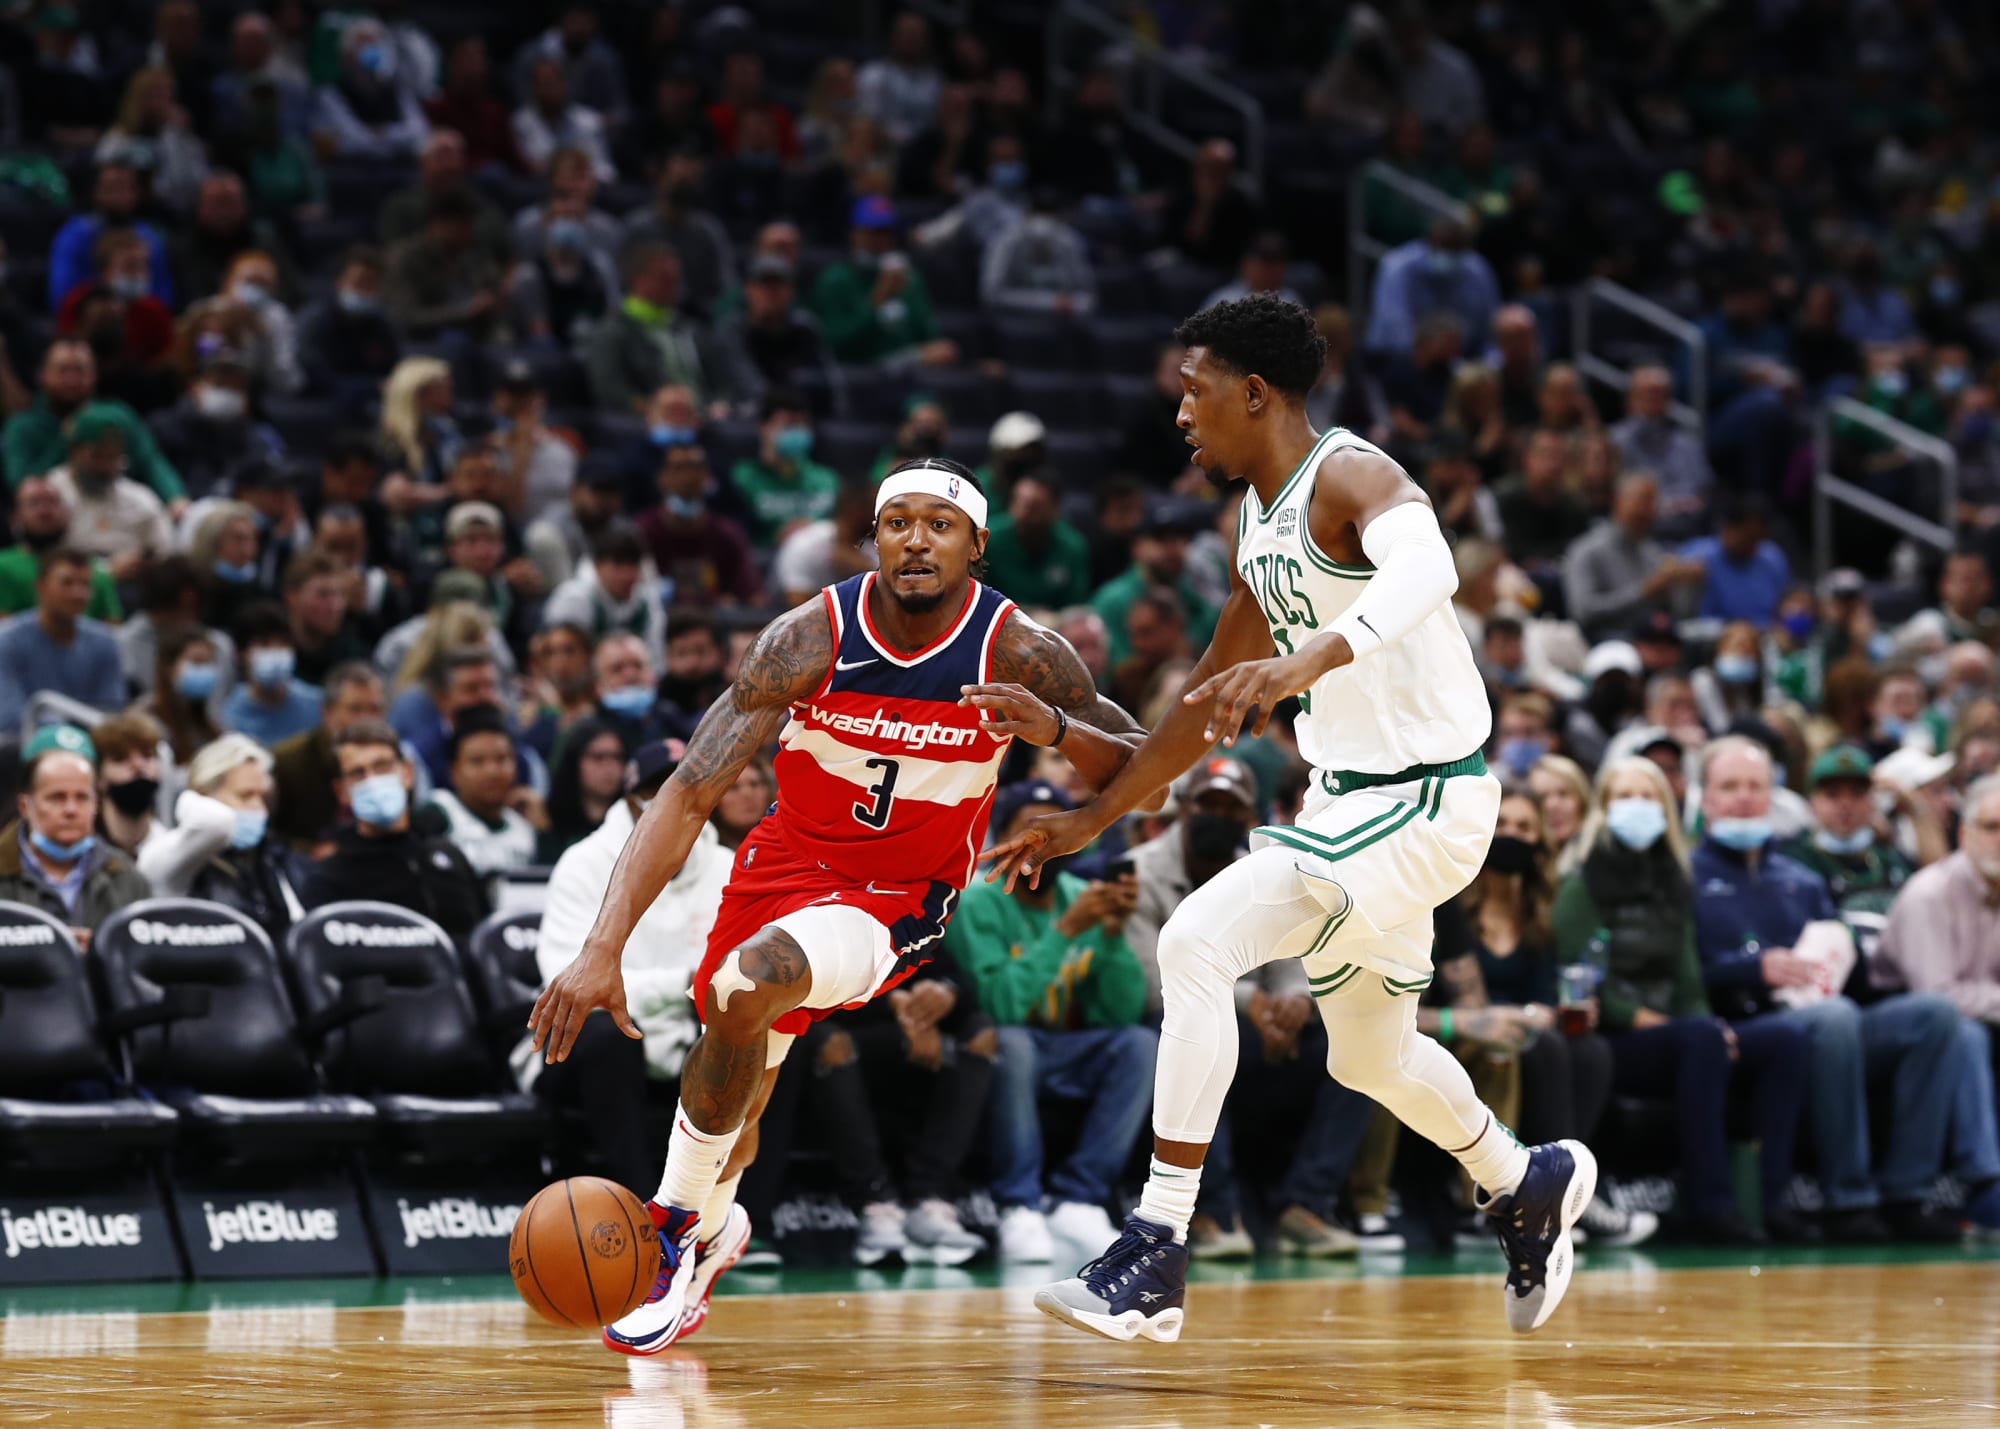 Boston Celtics: This Juan Hernangomez-Josh Richardson trade returns PG